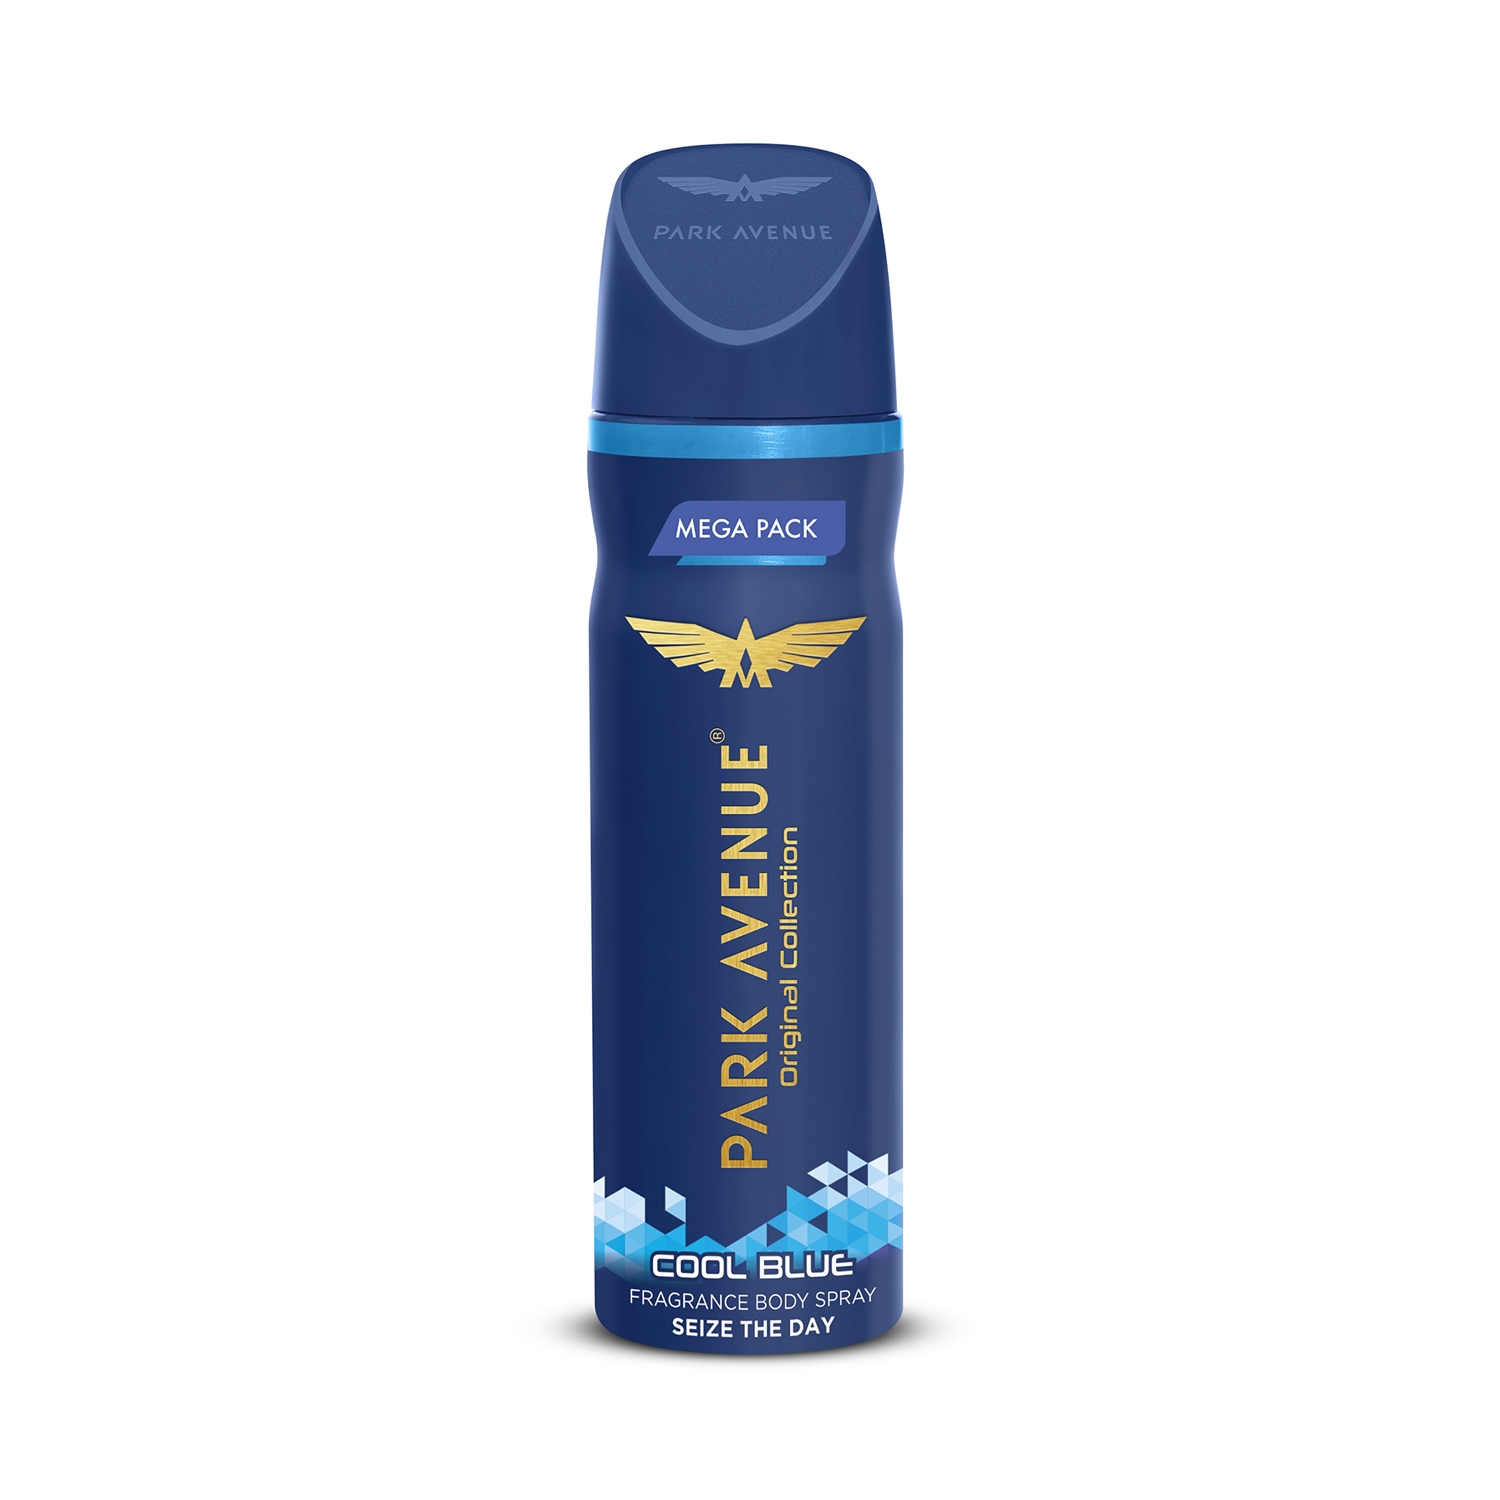 Park Avenue | Park Avenue Cool Blue Fragrance Body Spray (220ml)